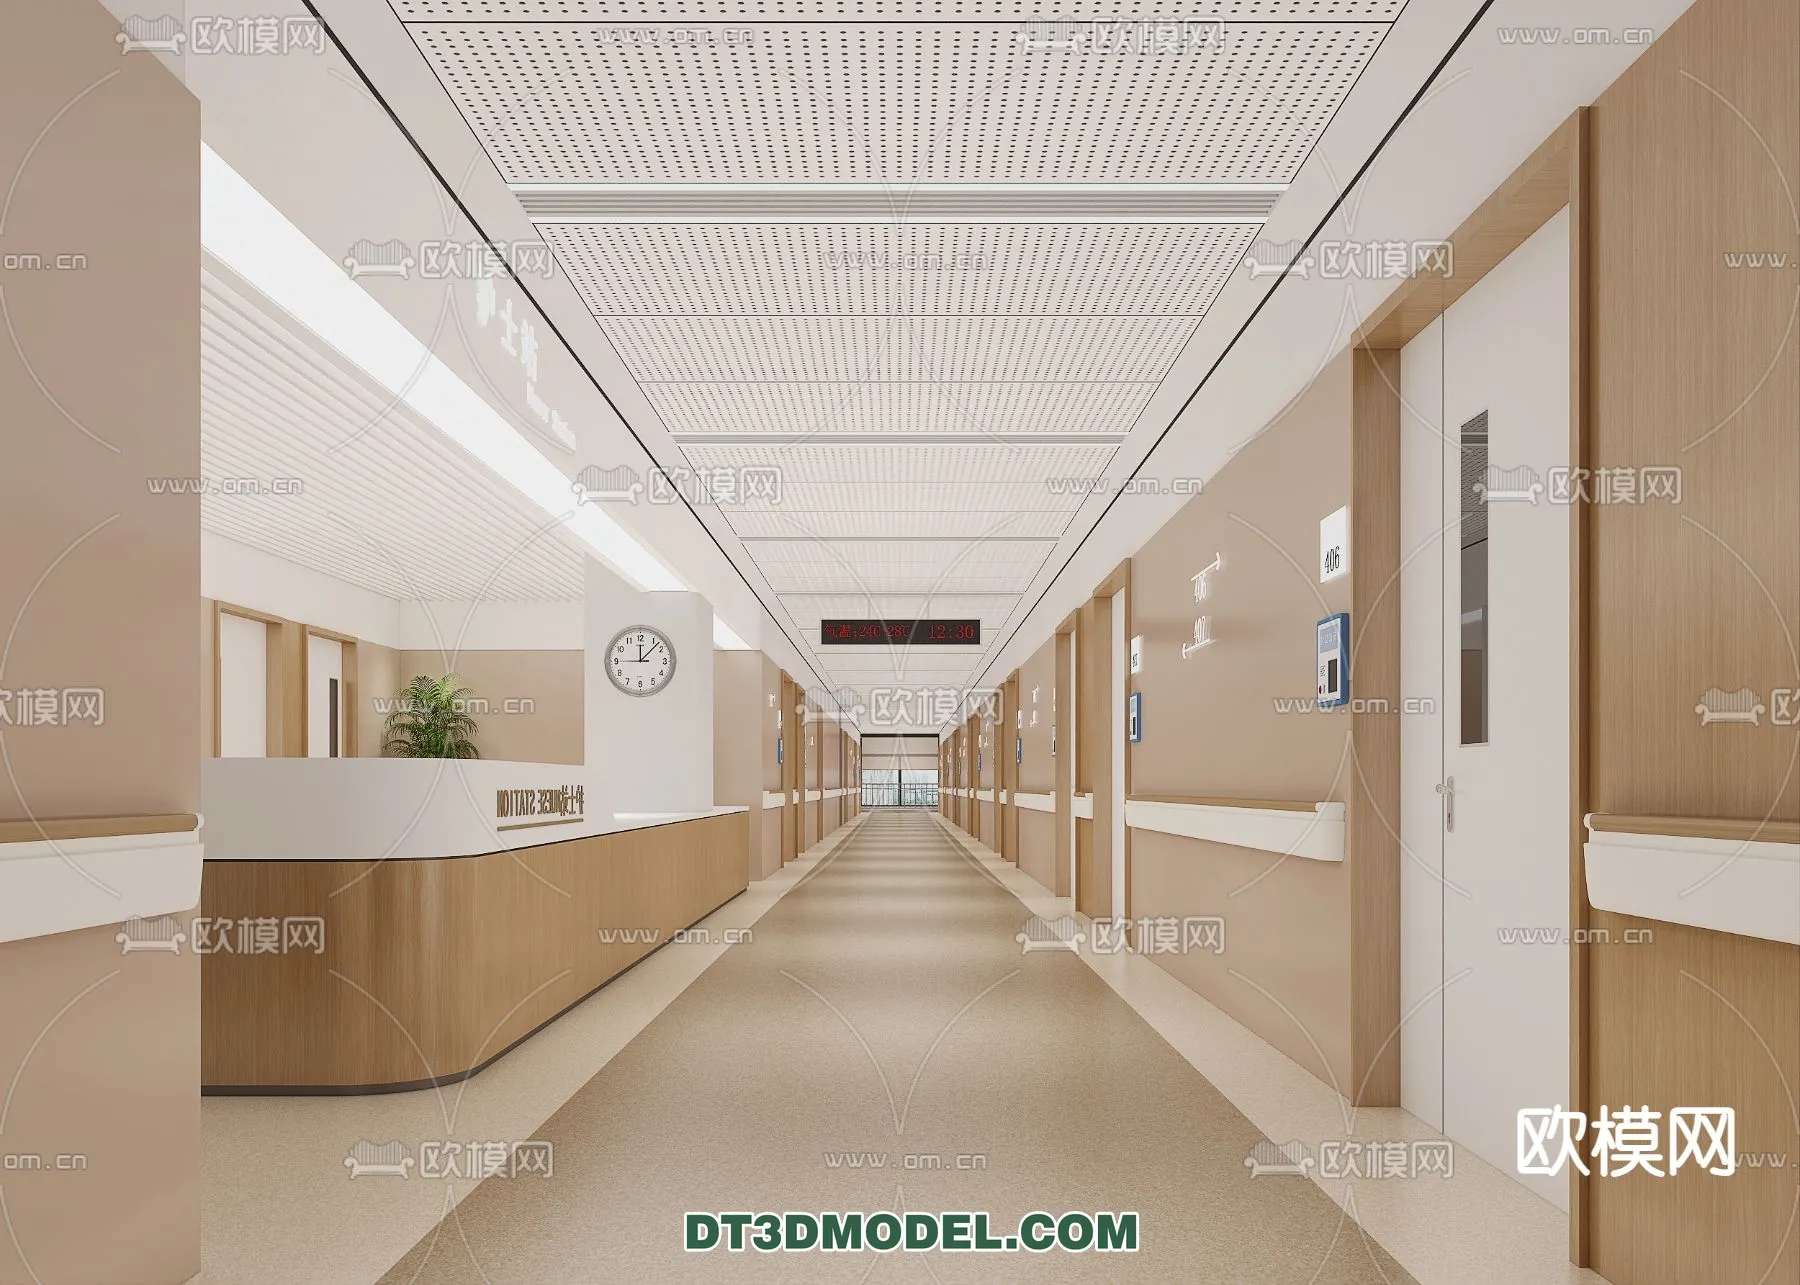 HOSPITAL 3D SCENES – MODERN – 0129